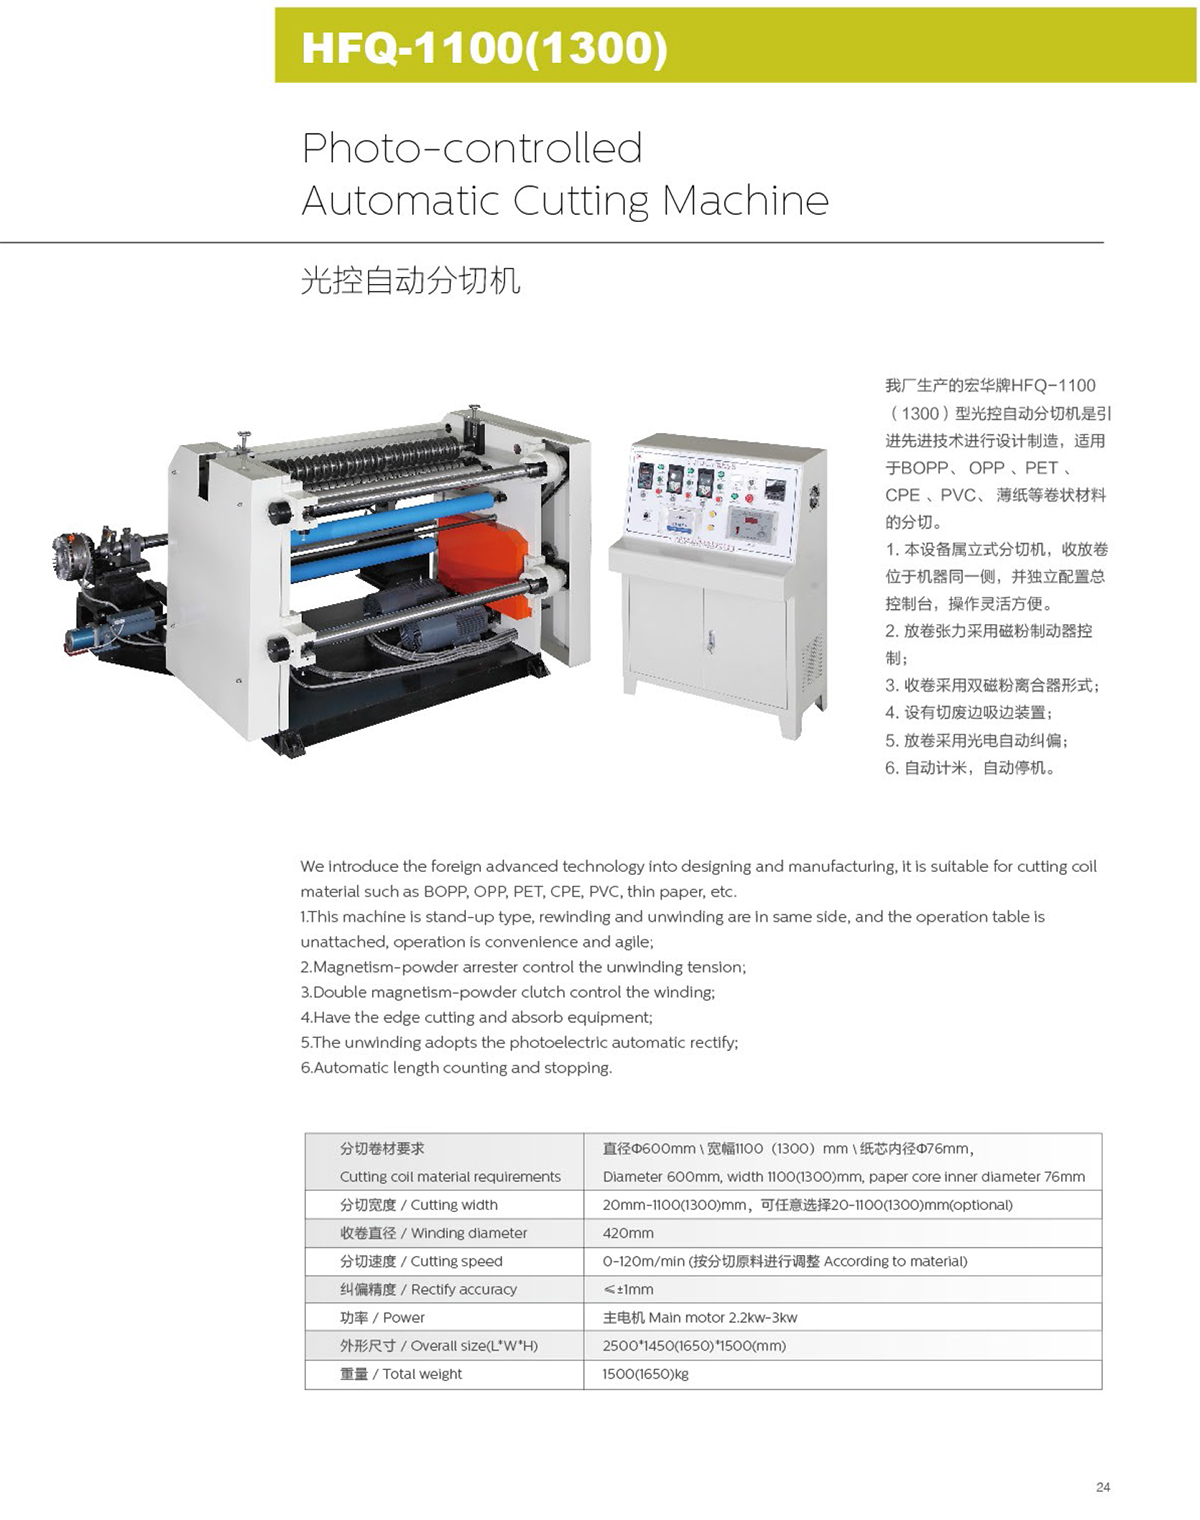 HFQ-1100(1300) Photo-Controlled Automatic Cutting Machine